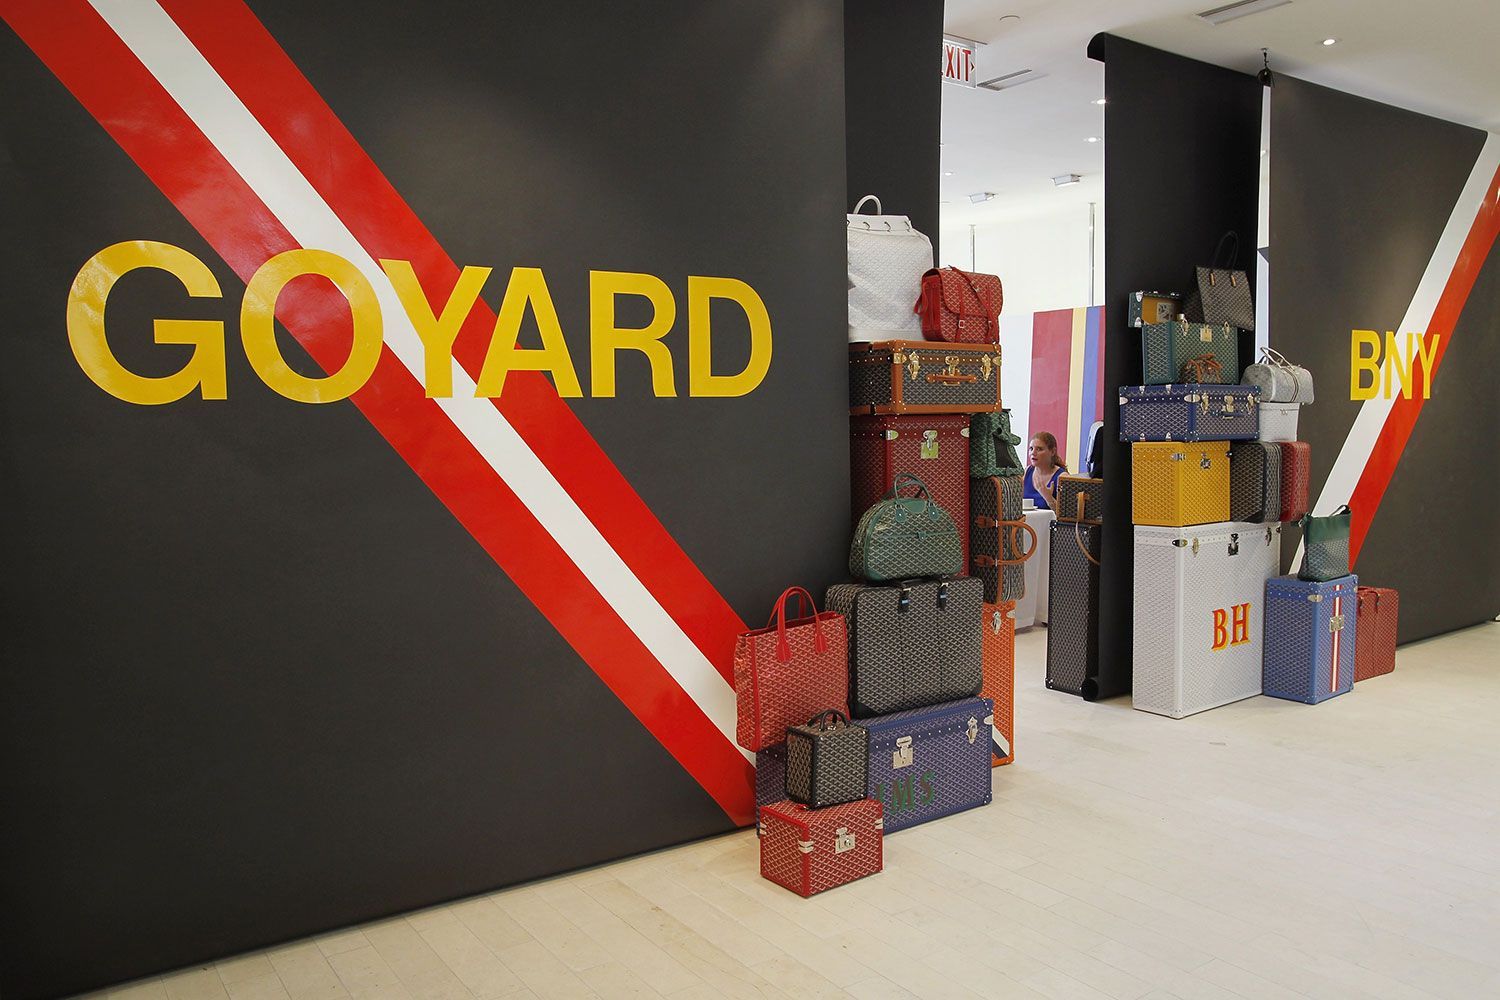 Goyard: A Brief History of The Luxury Brand